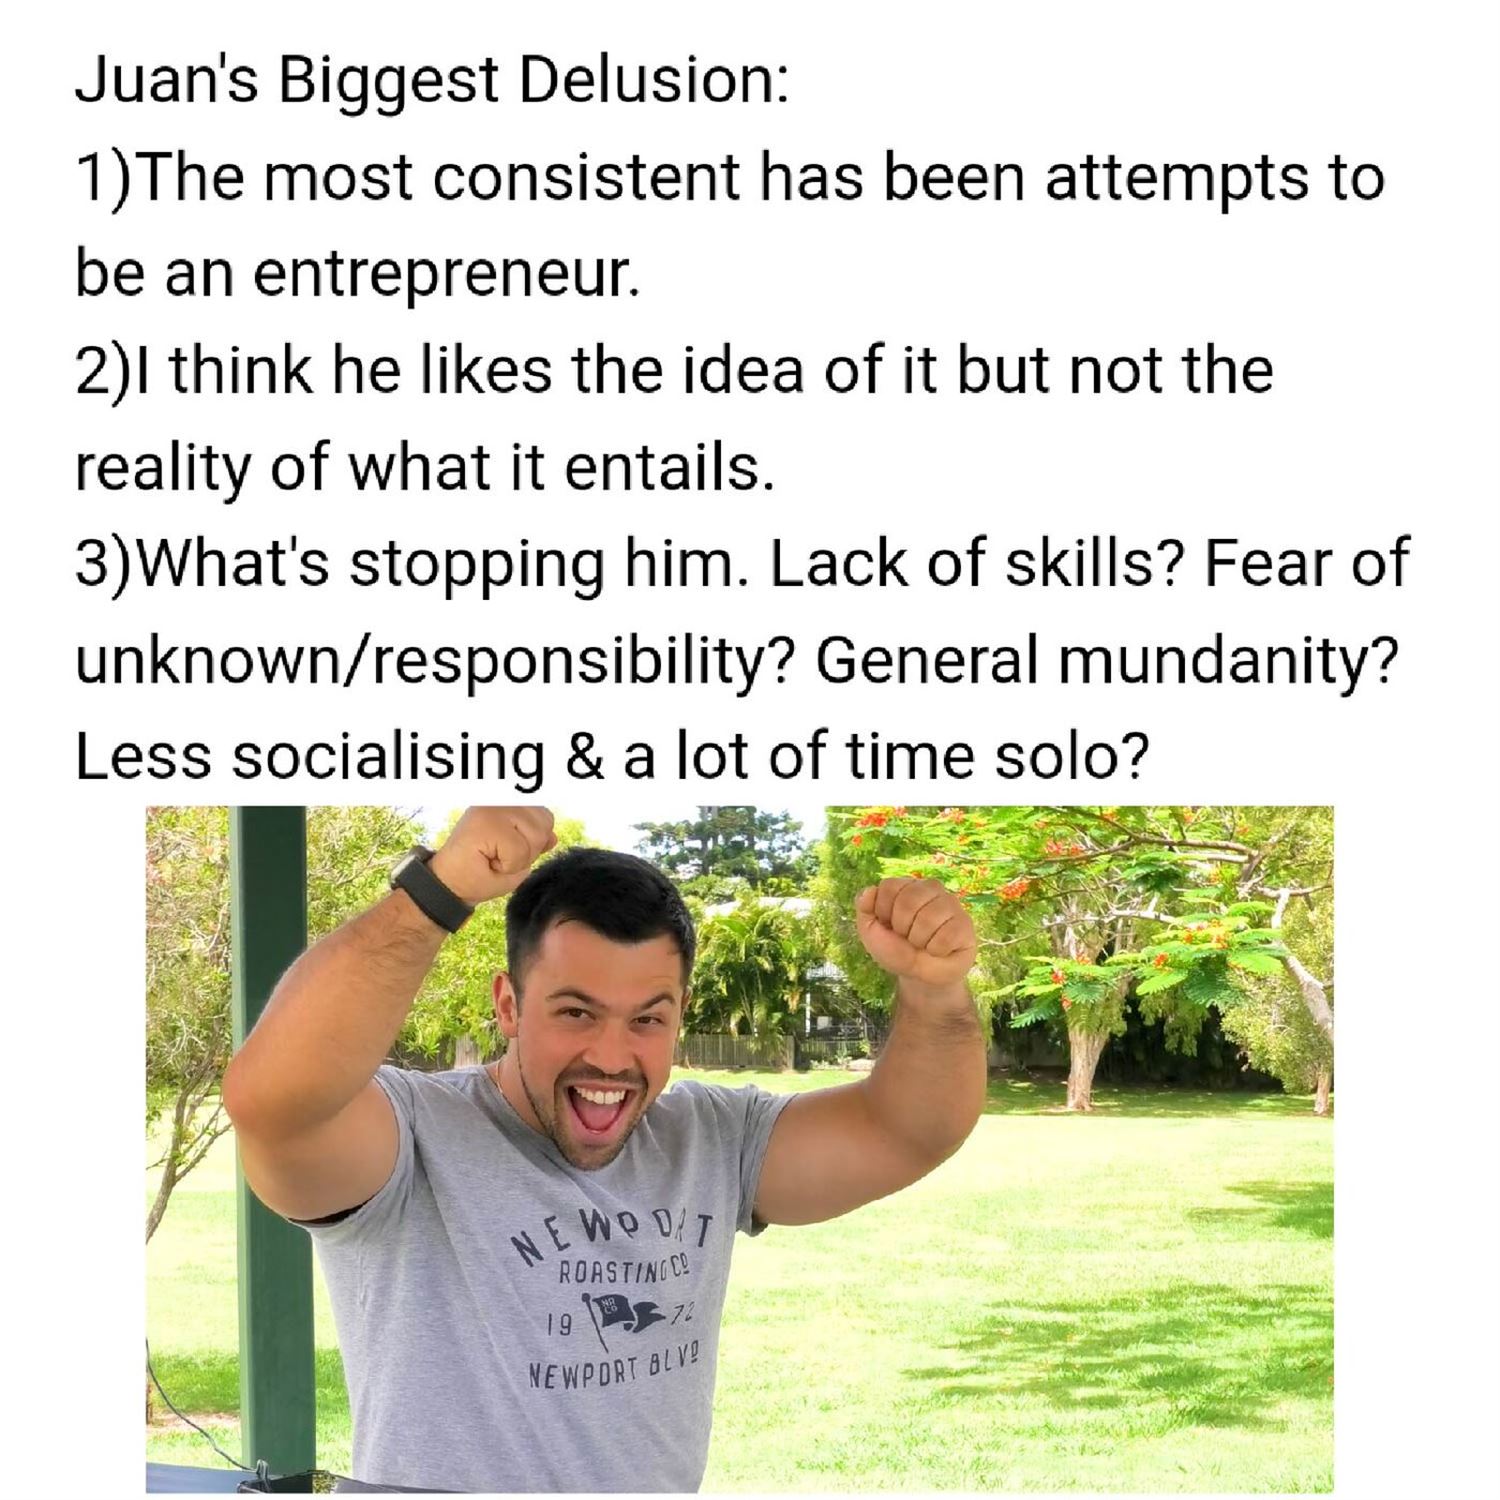 Juan's biggest delusion